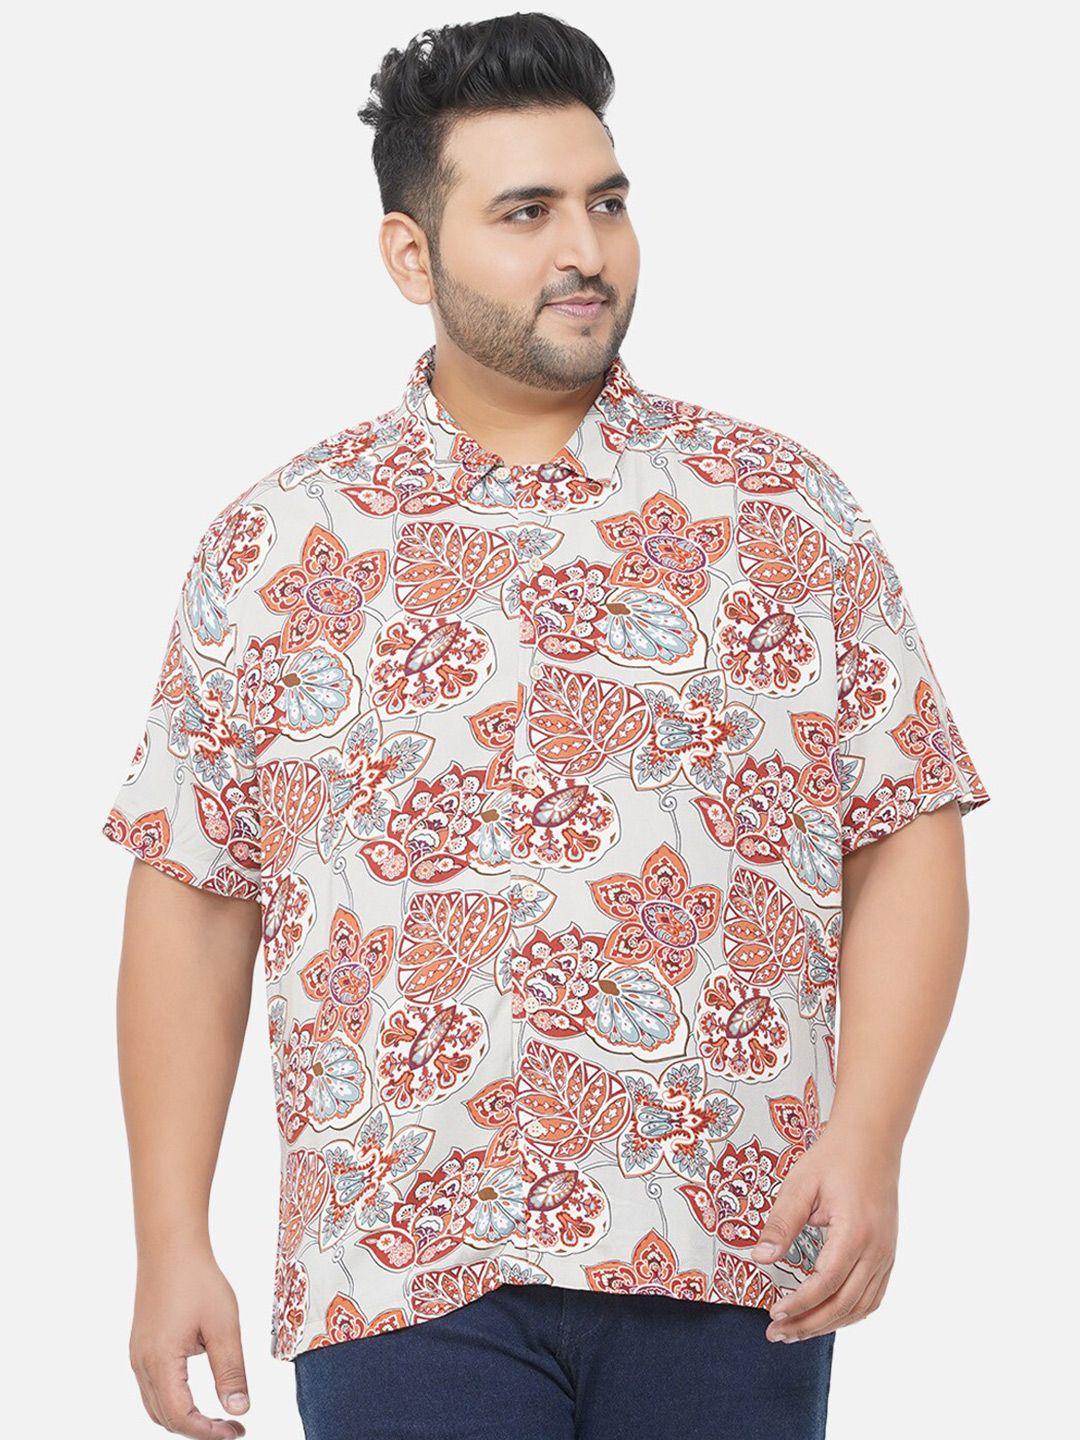 santonio plus size classic floral opaque printed pure cotton casual shirt